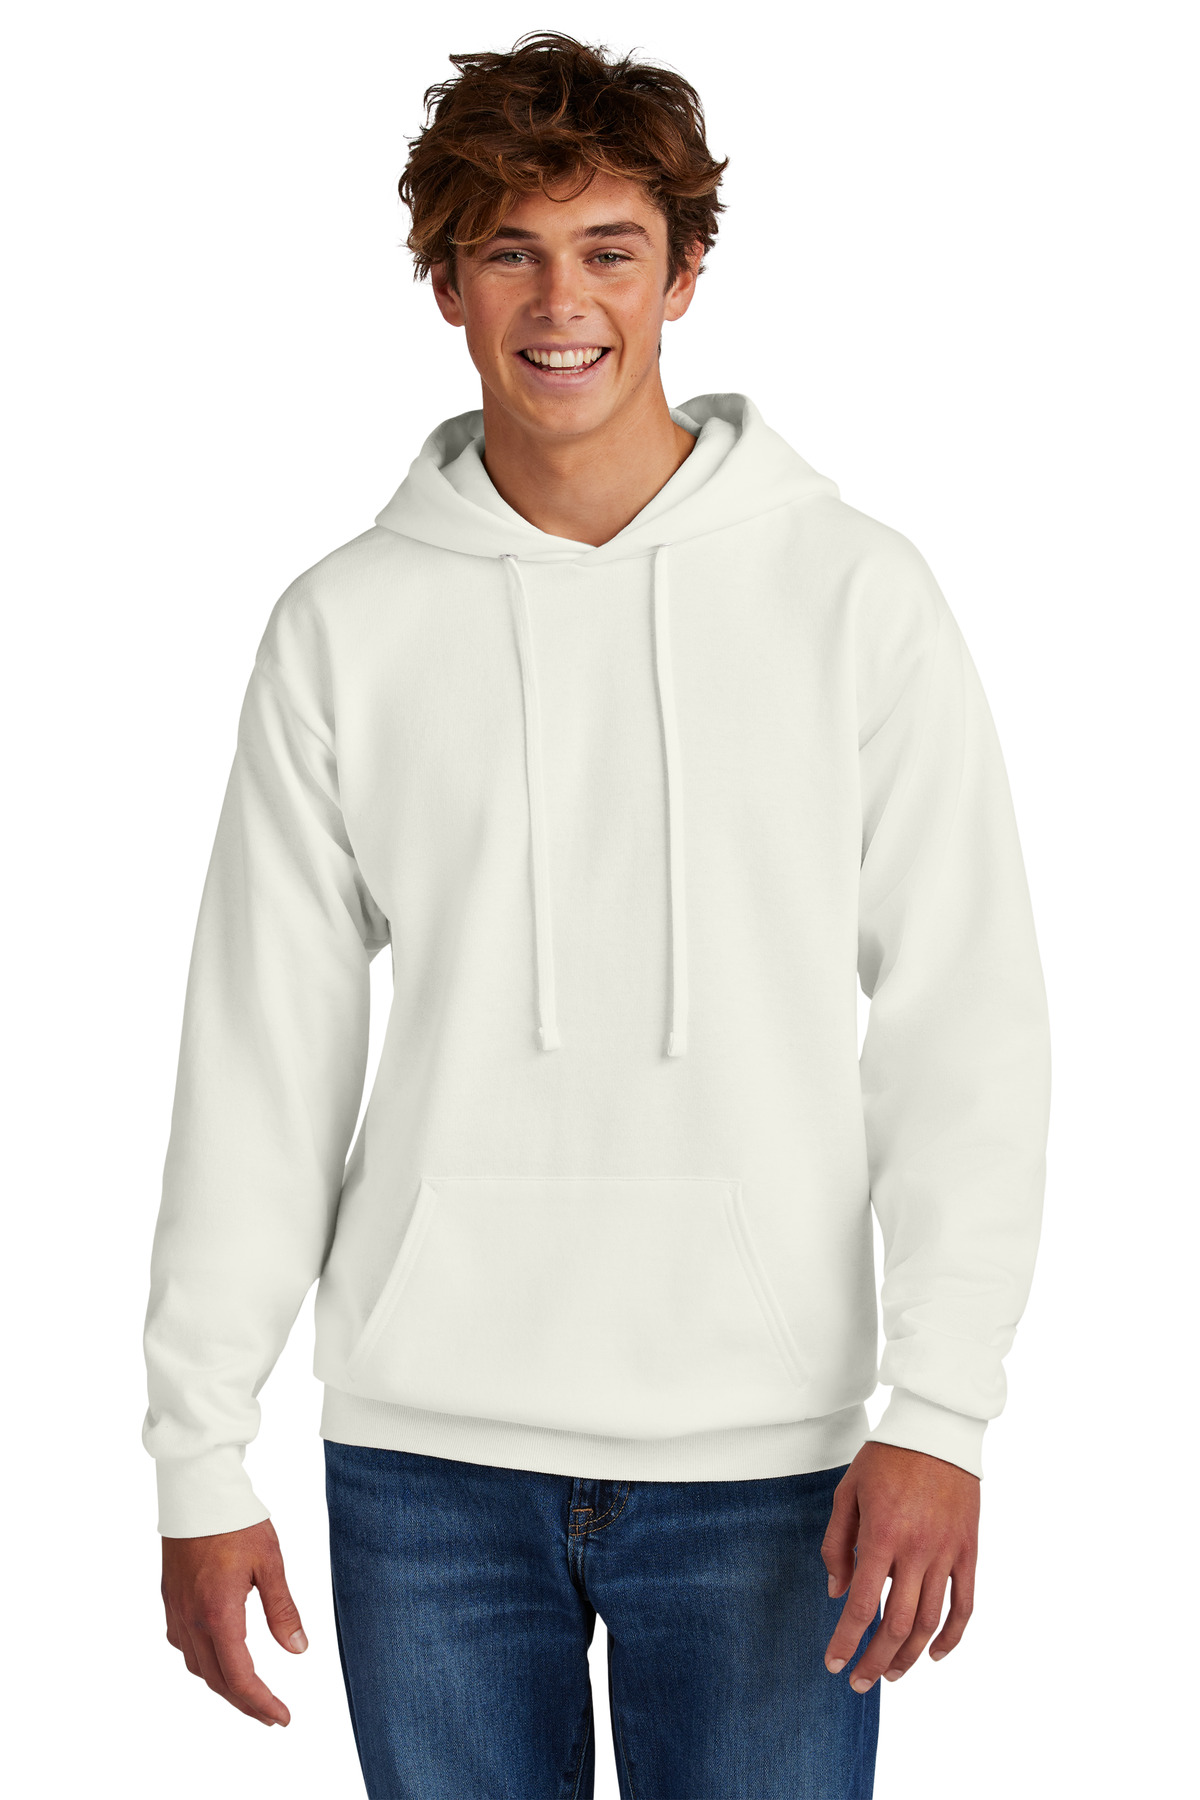 Port &#38; Company Core Fleece PFD Pullover Hooded Sweatshirt-Port & Company